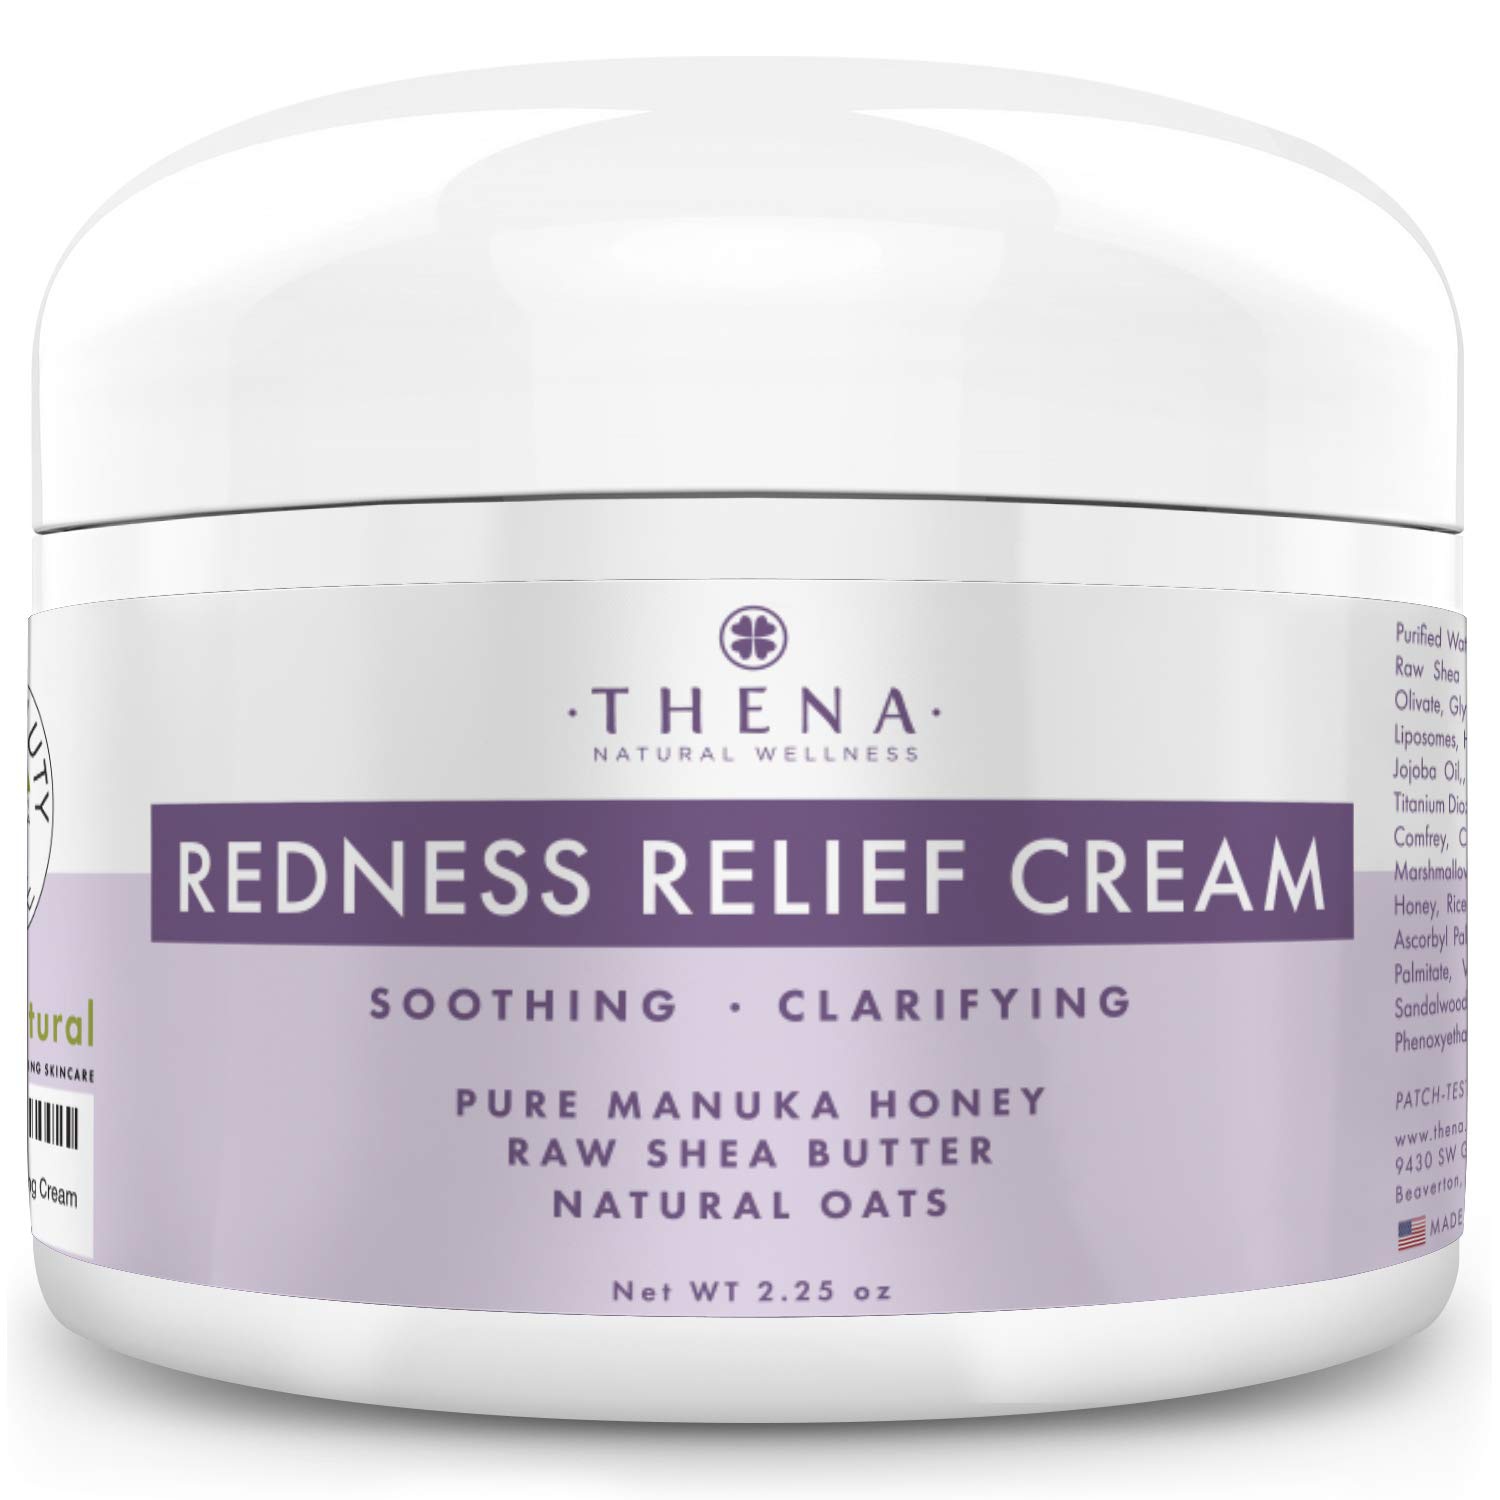 Thena Redness Relief Cream